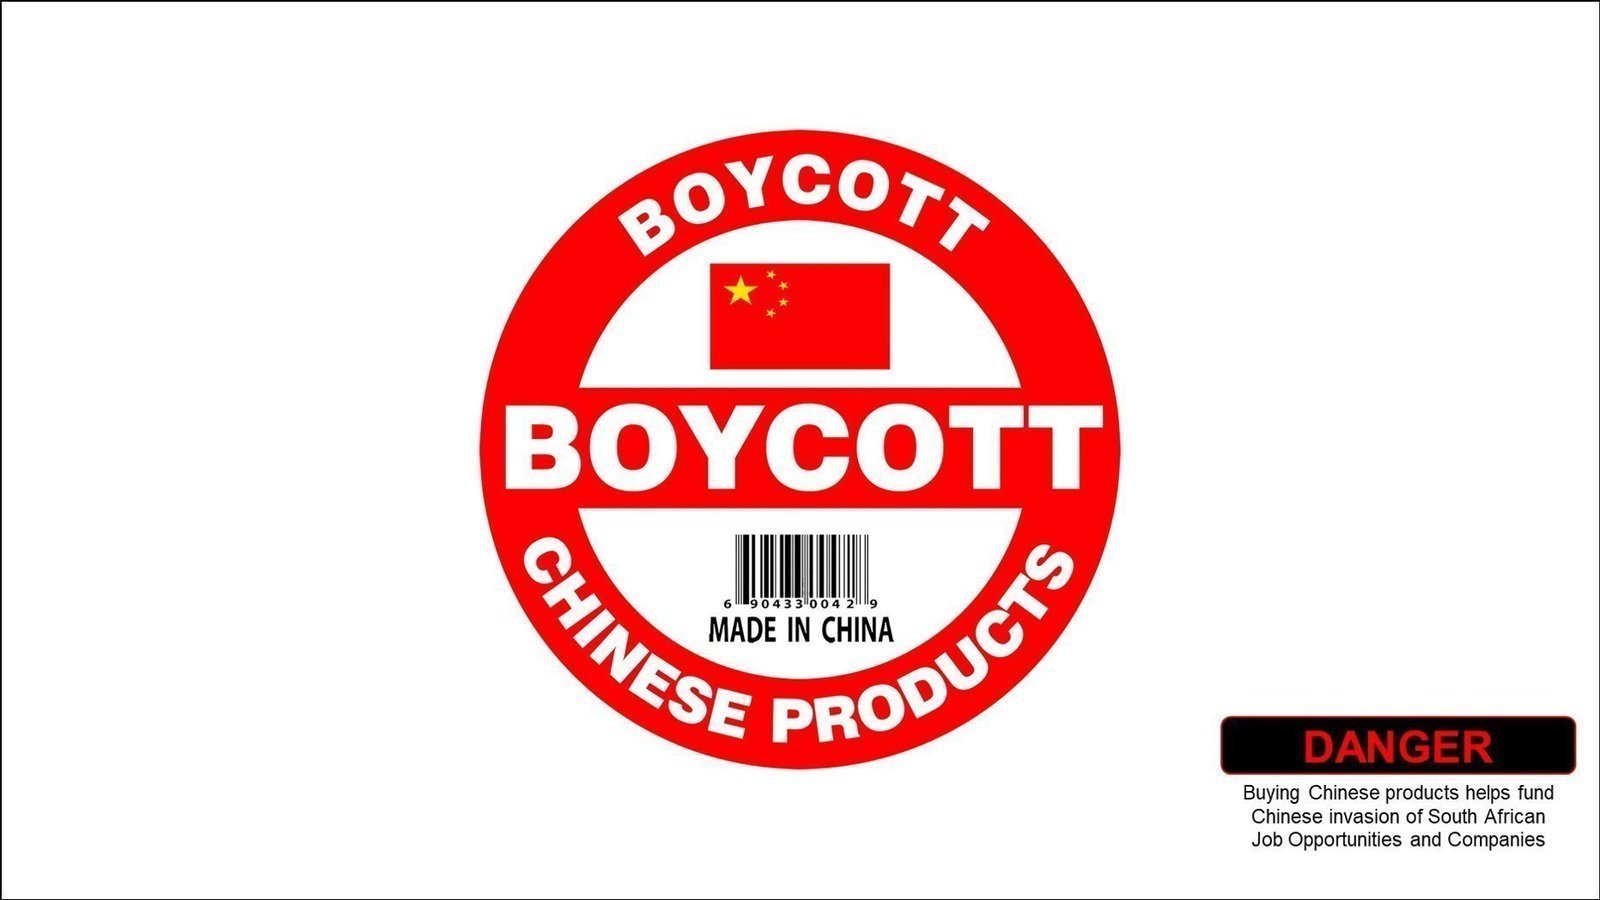 Boycott Chinese products